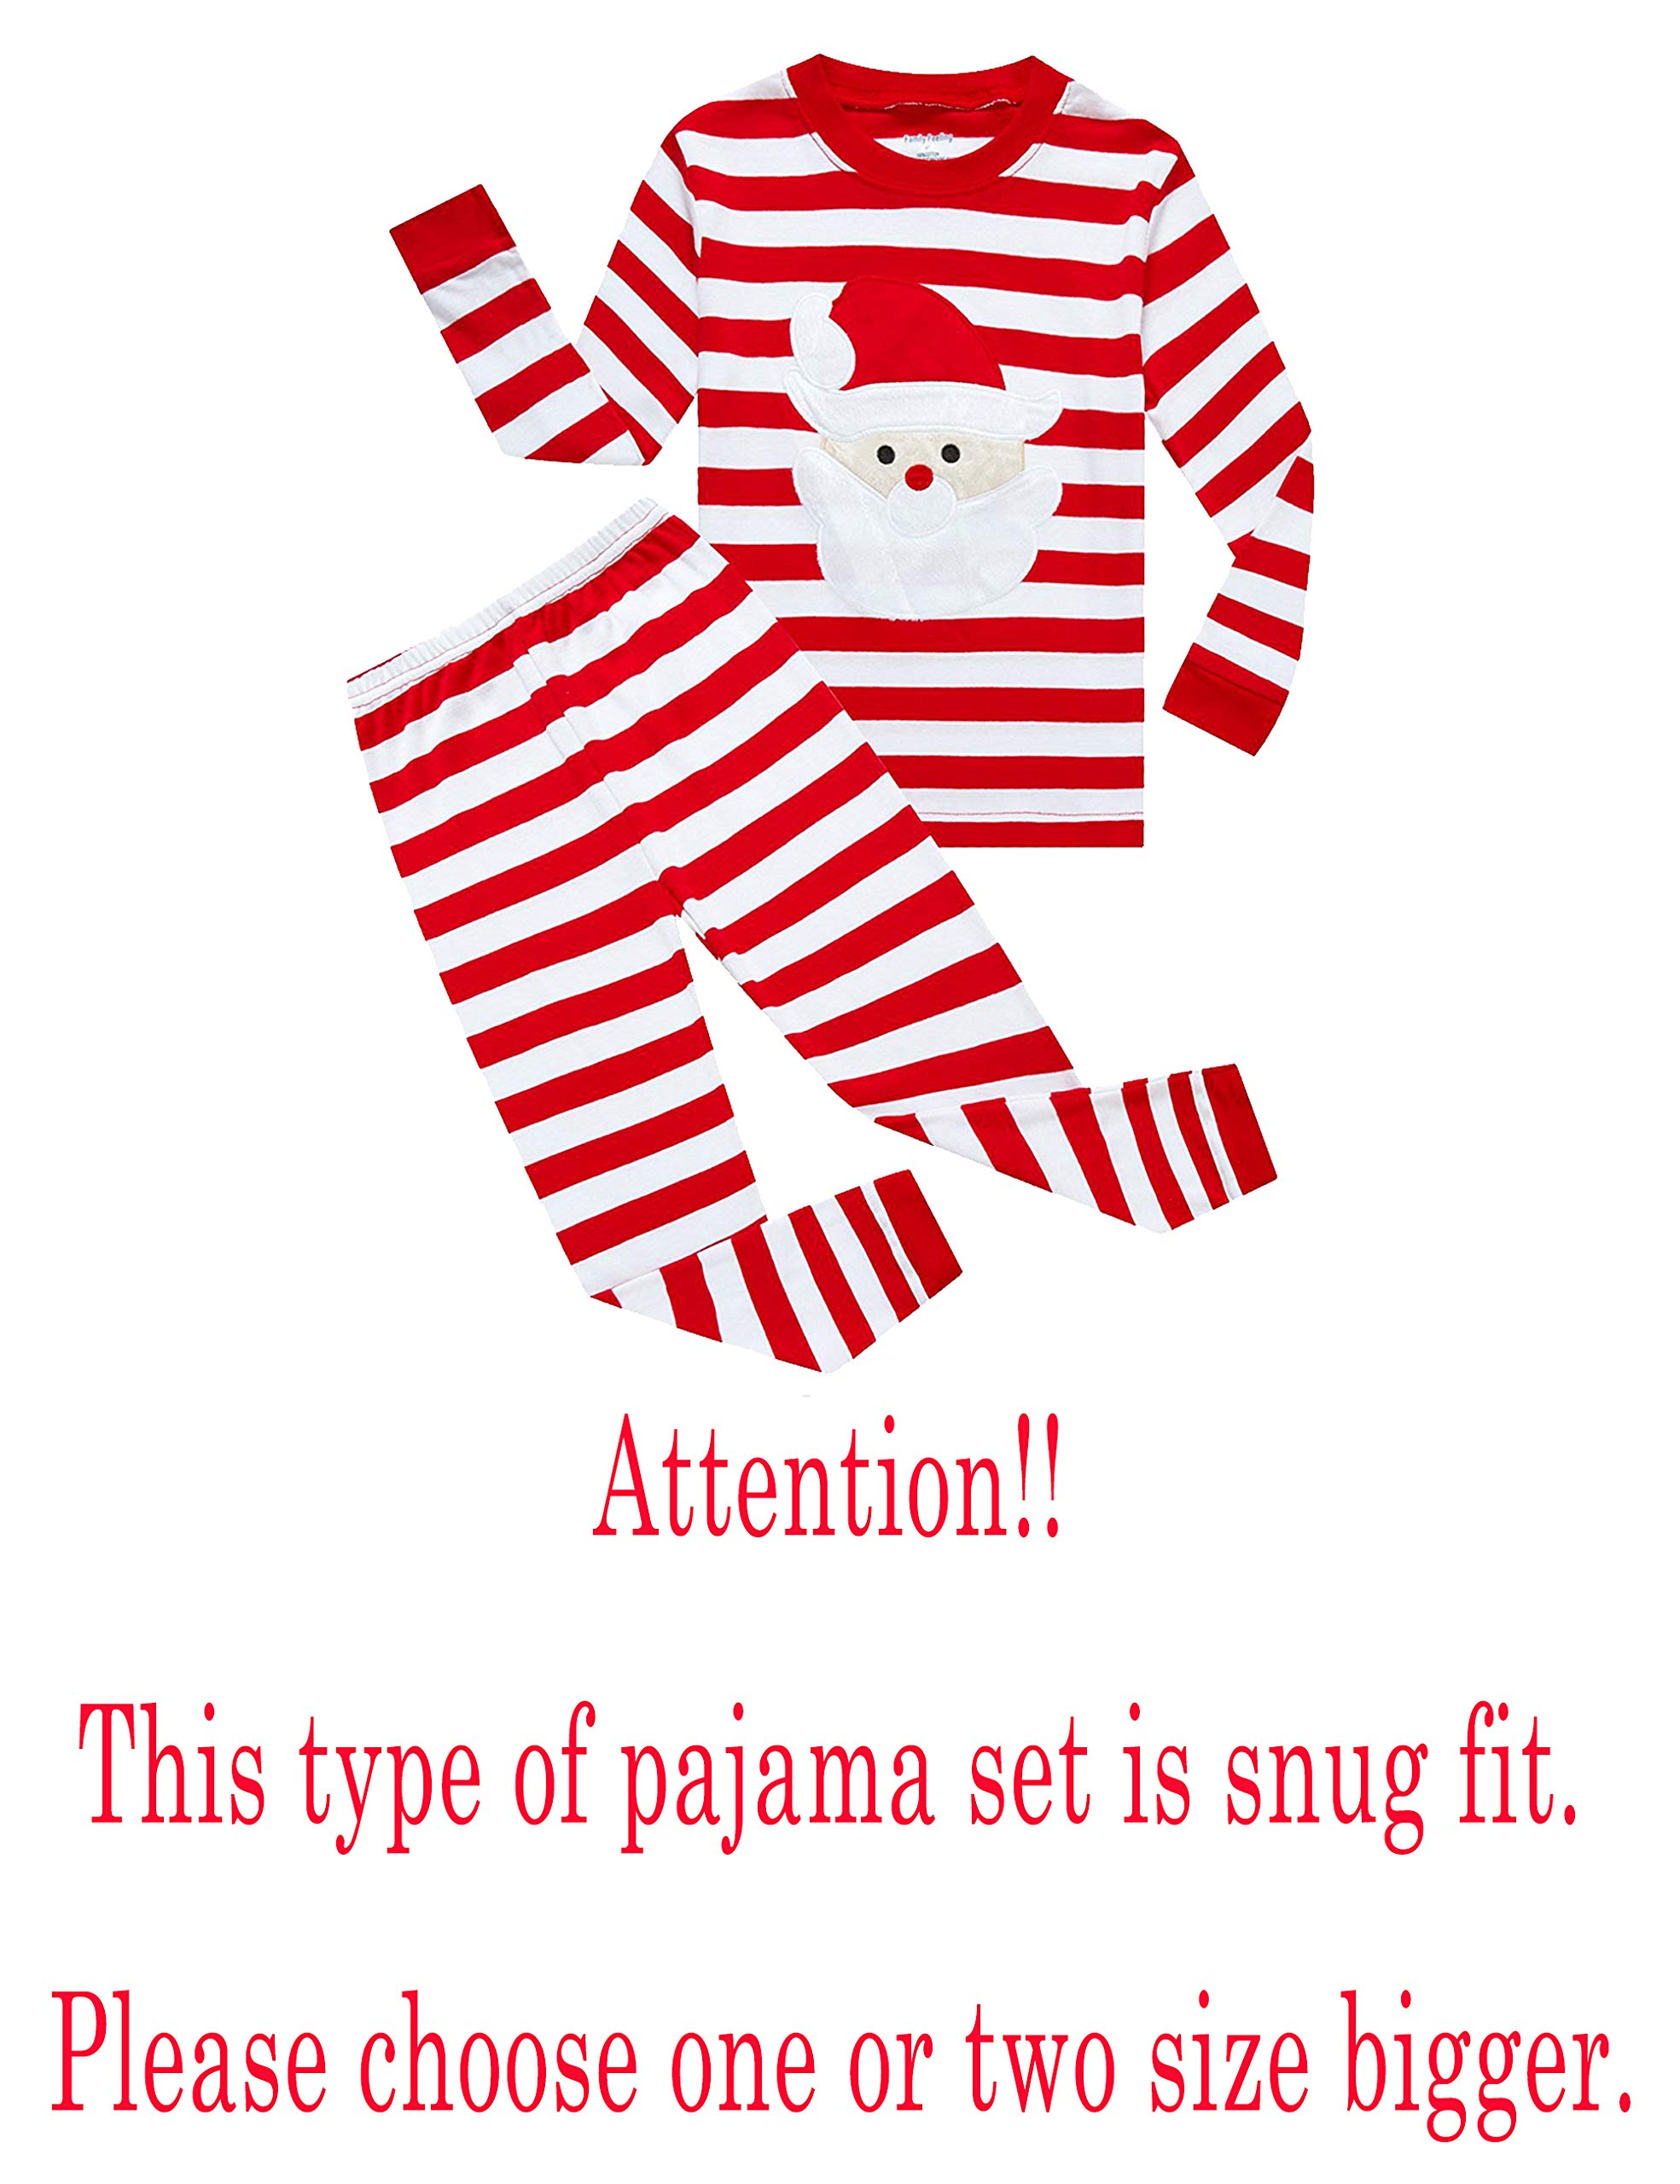 Family Feeling Striped Boys Girls 2 Piece Christmas Pajamas Set 100% Cotton Pjs